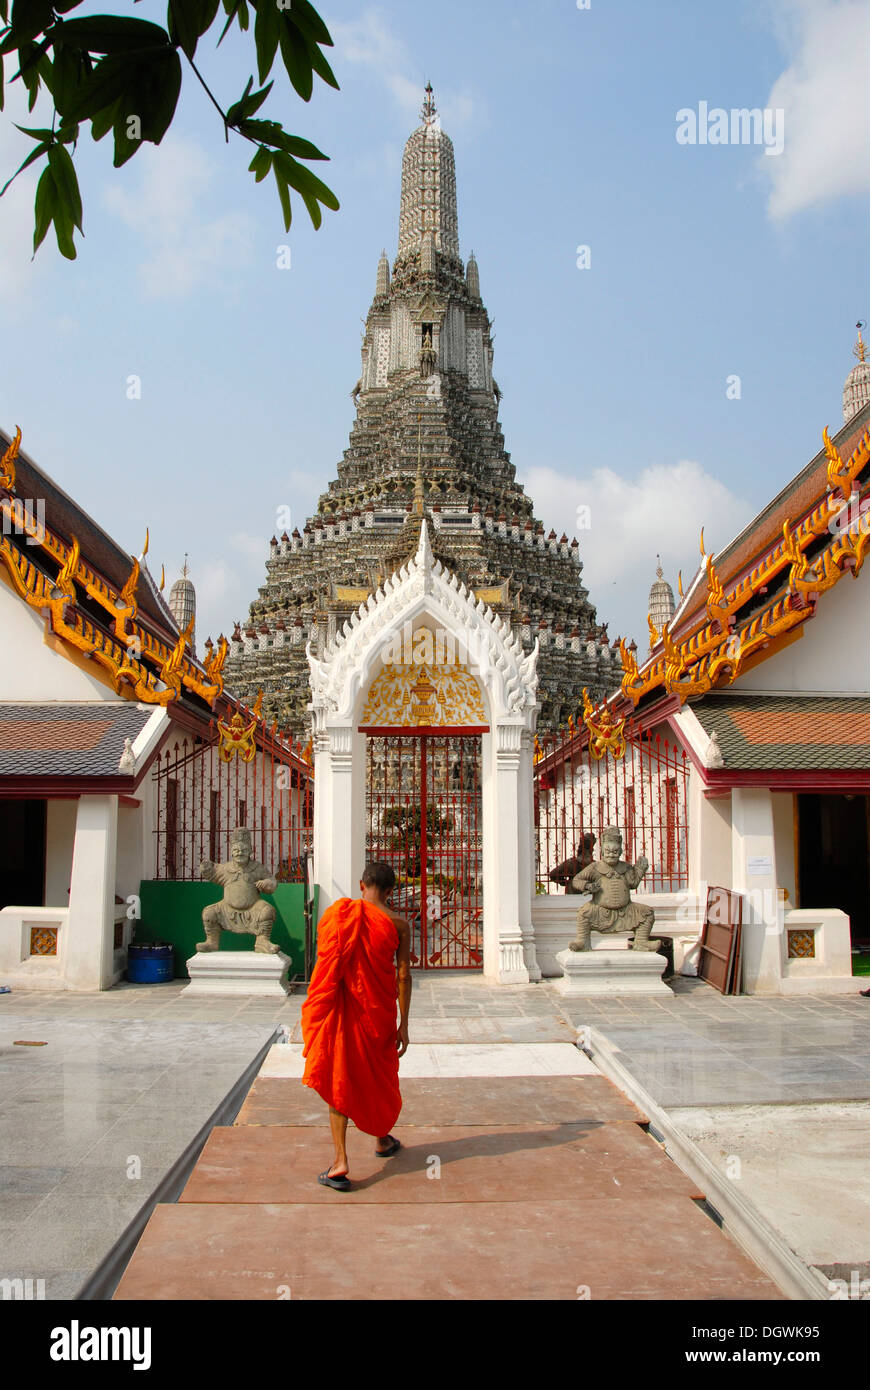 Theravada-Buddhismus, Mönch auf dem Weg zum Tempel, orange Gewand, Stupa, Phra Chedi, Prang, Wat Arun, Bangkok, Thailand Stockfoto